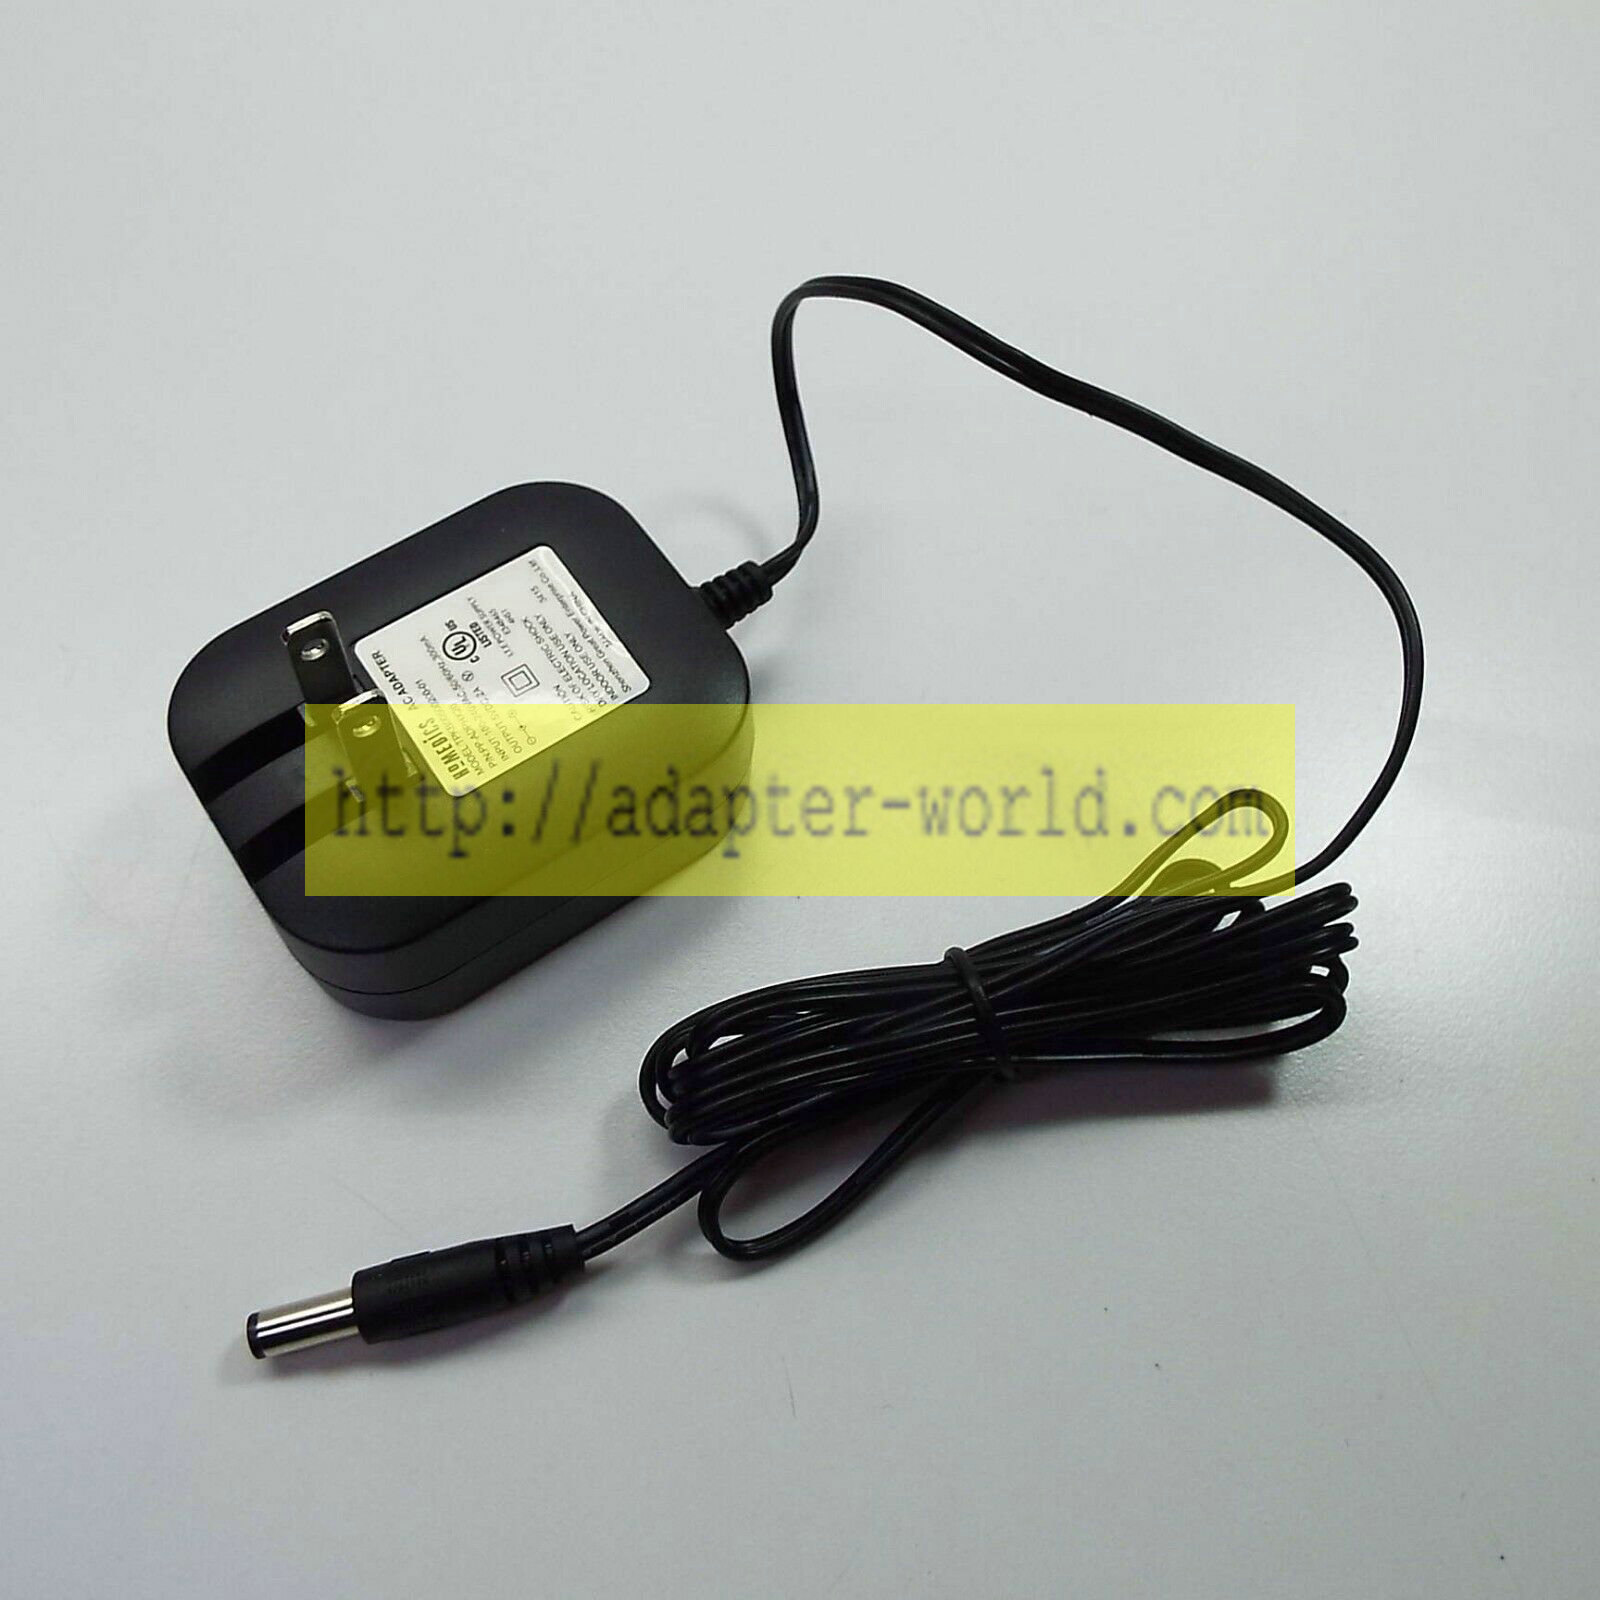 *Brand NEW* PP-ADPHX20 5VDC 2A AC DC Adapter HOMEDICS HMDX TPKB00500200-01 POWER SUPPLY